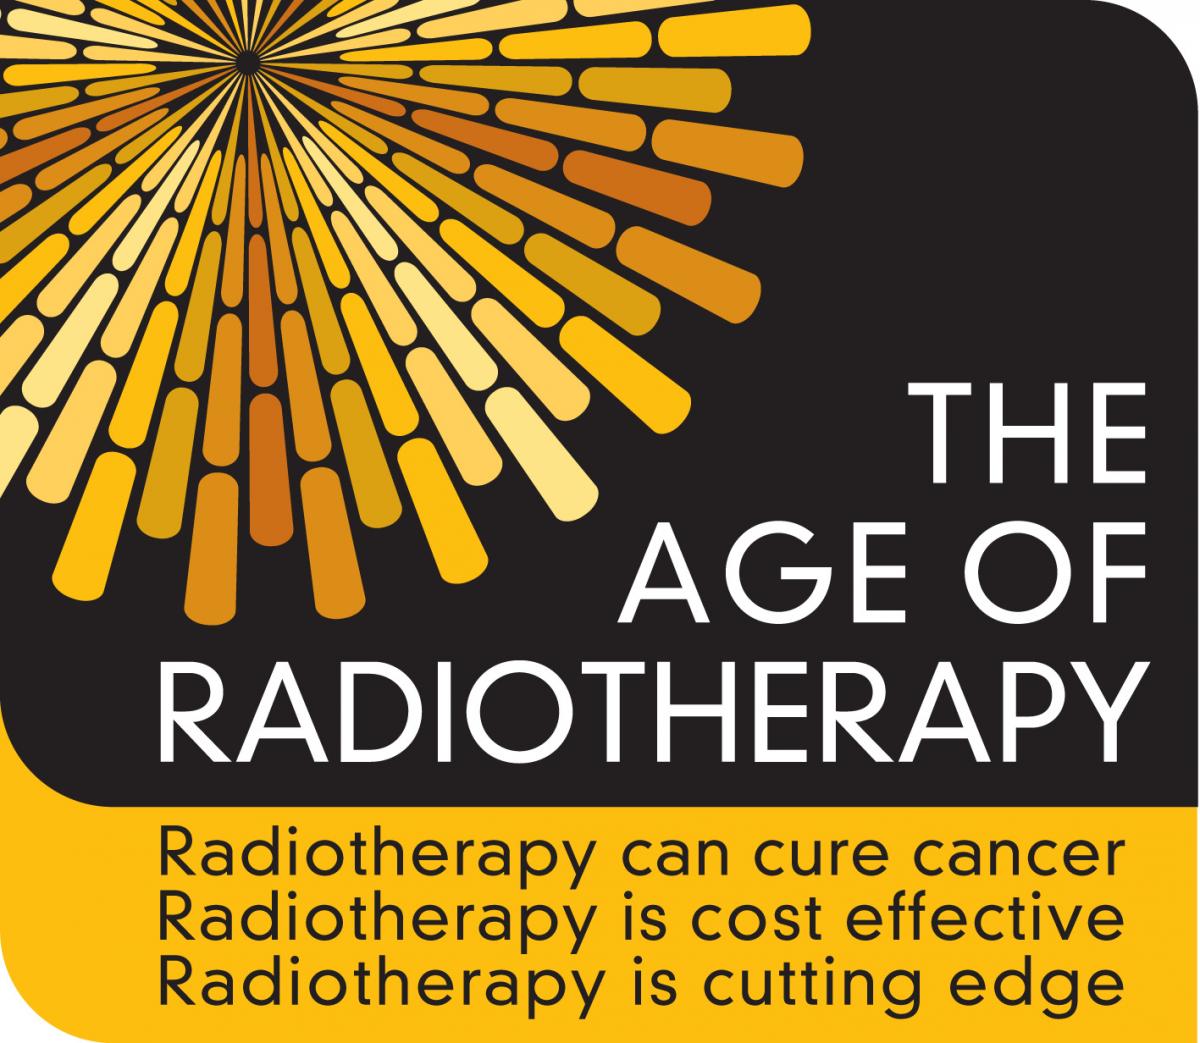 radiation therapist job uk vacancy list